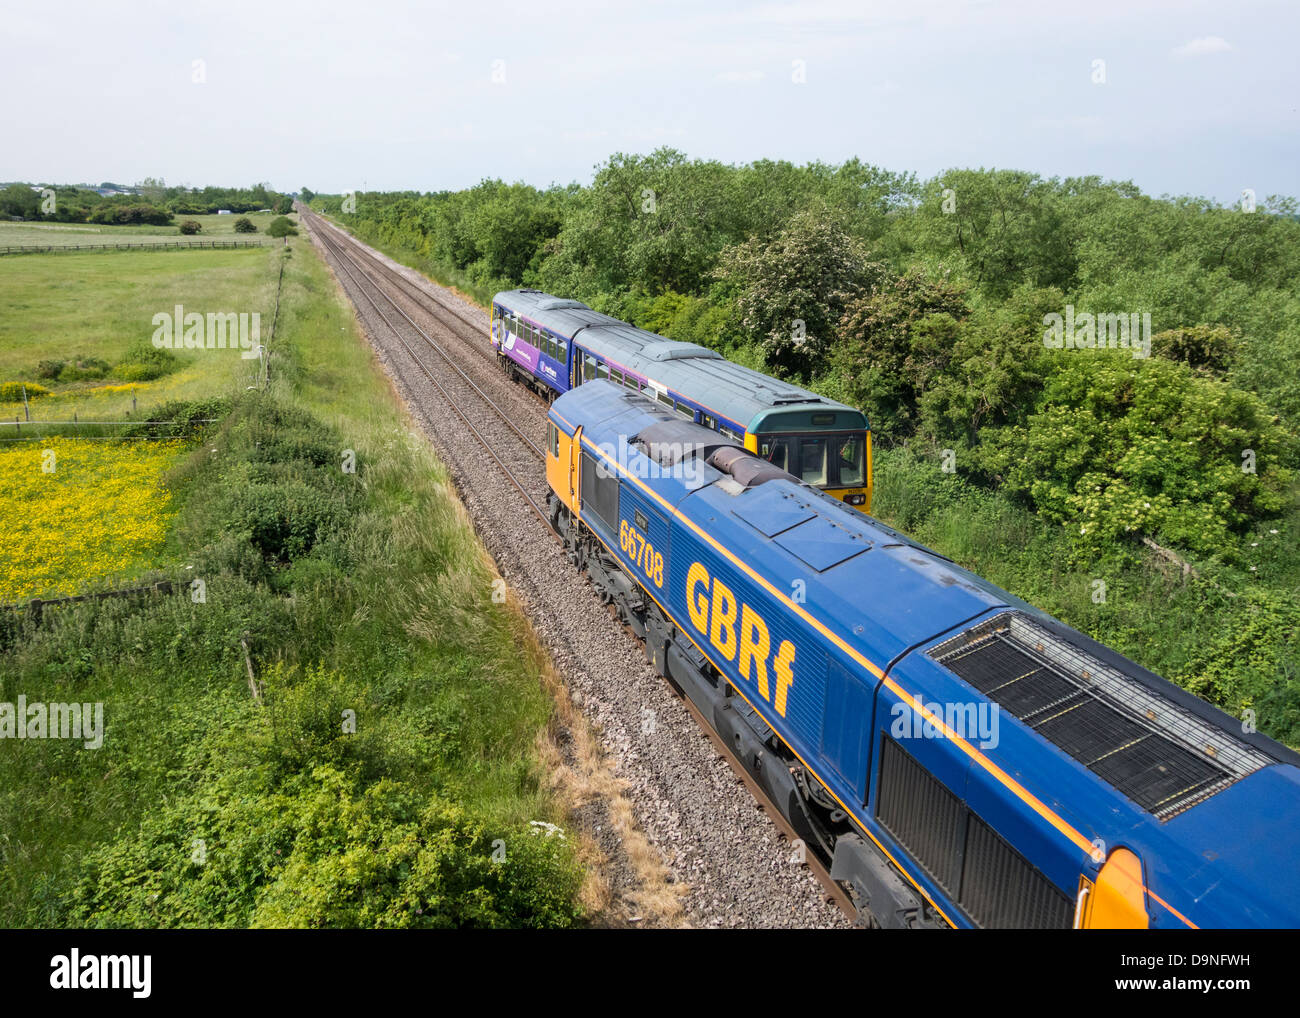 GBR Freight train and Northern Rail passenger train on Northern Rail line near Billingham, north east England, UK Stock Photo